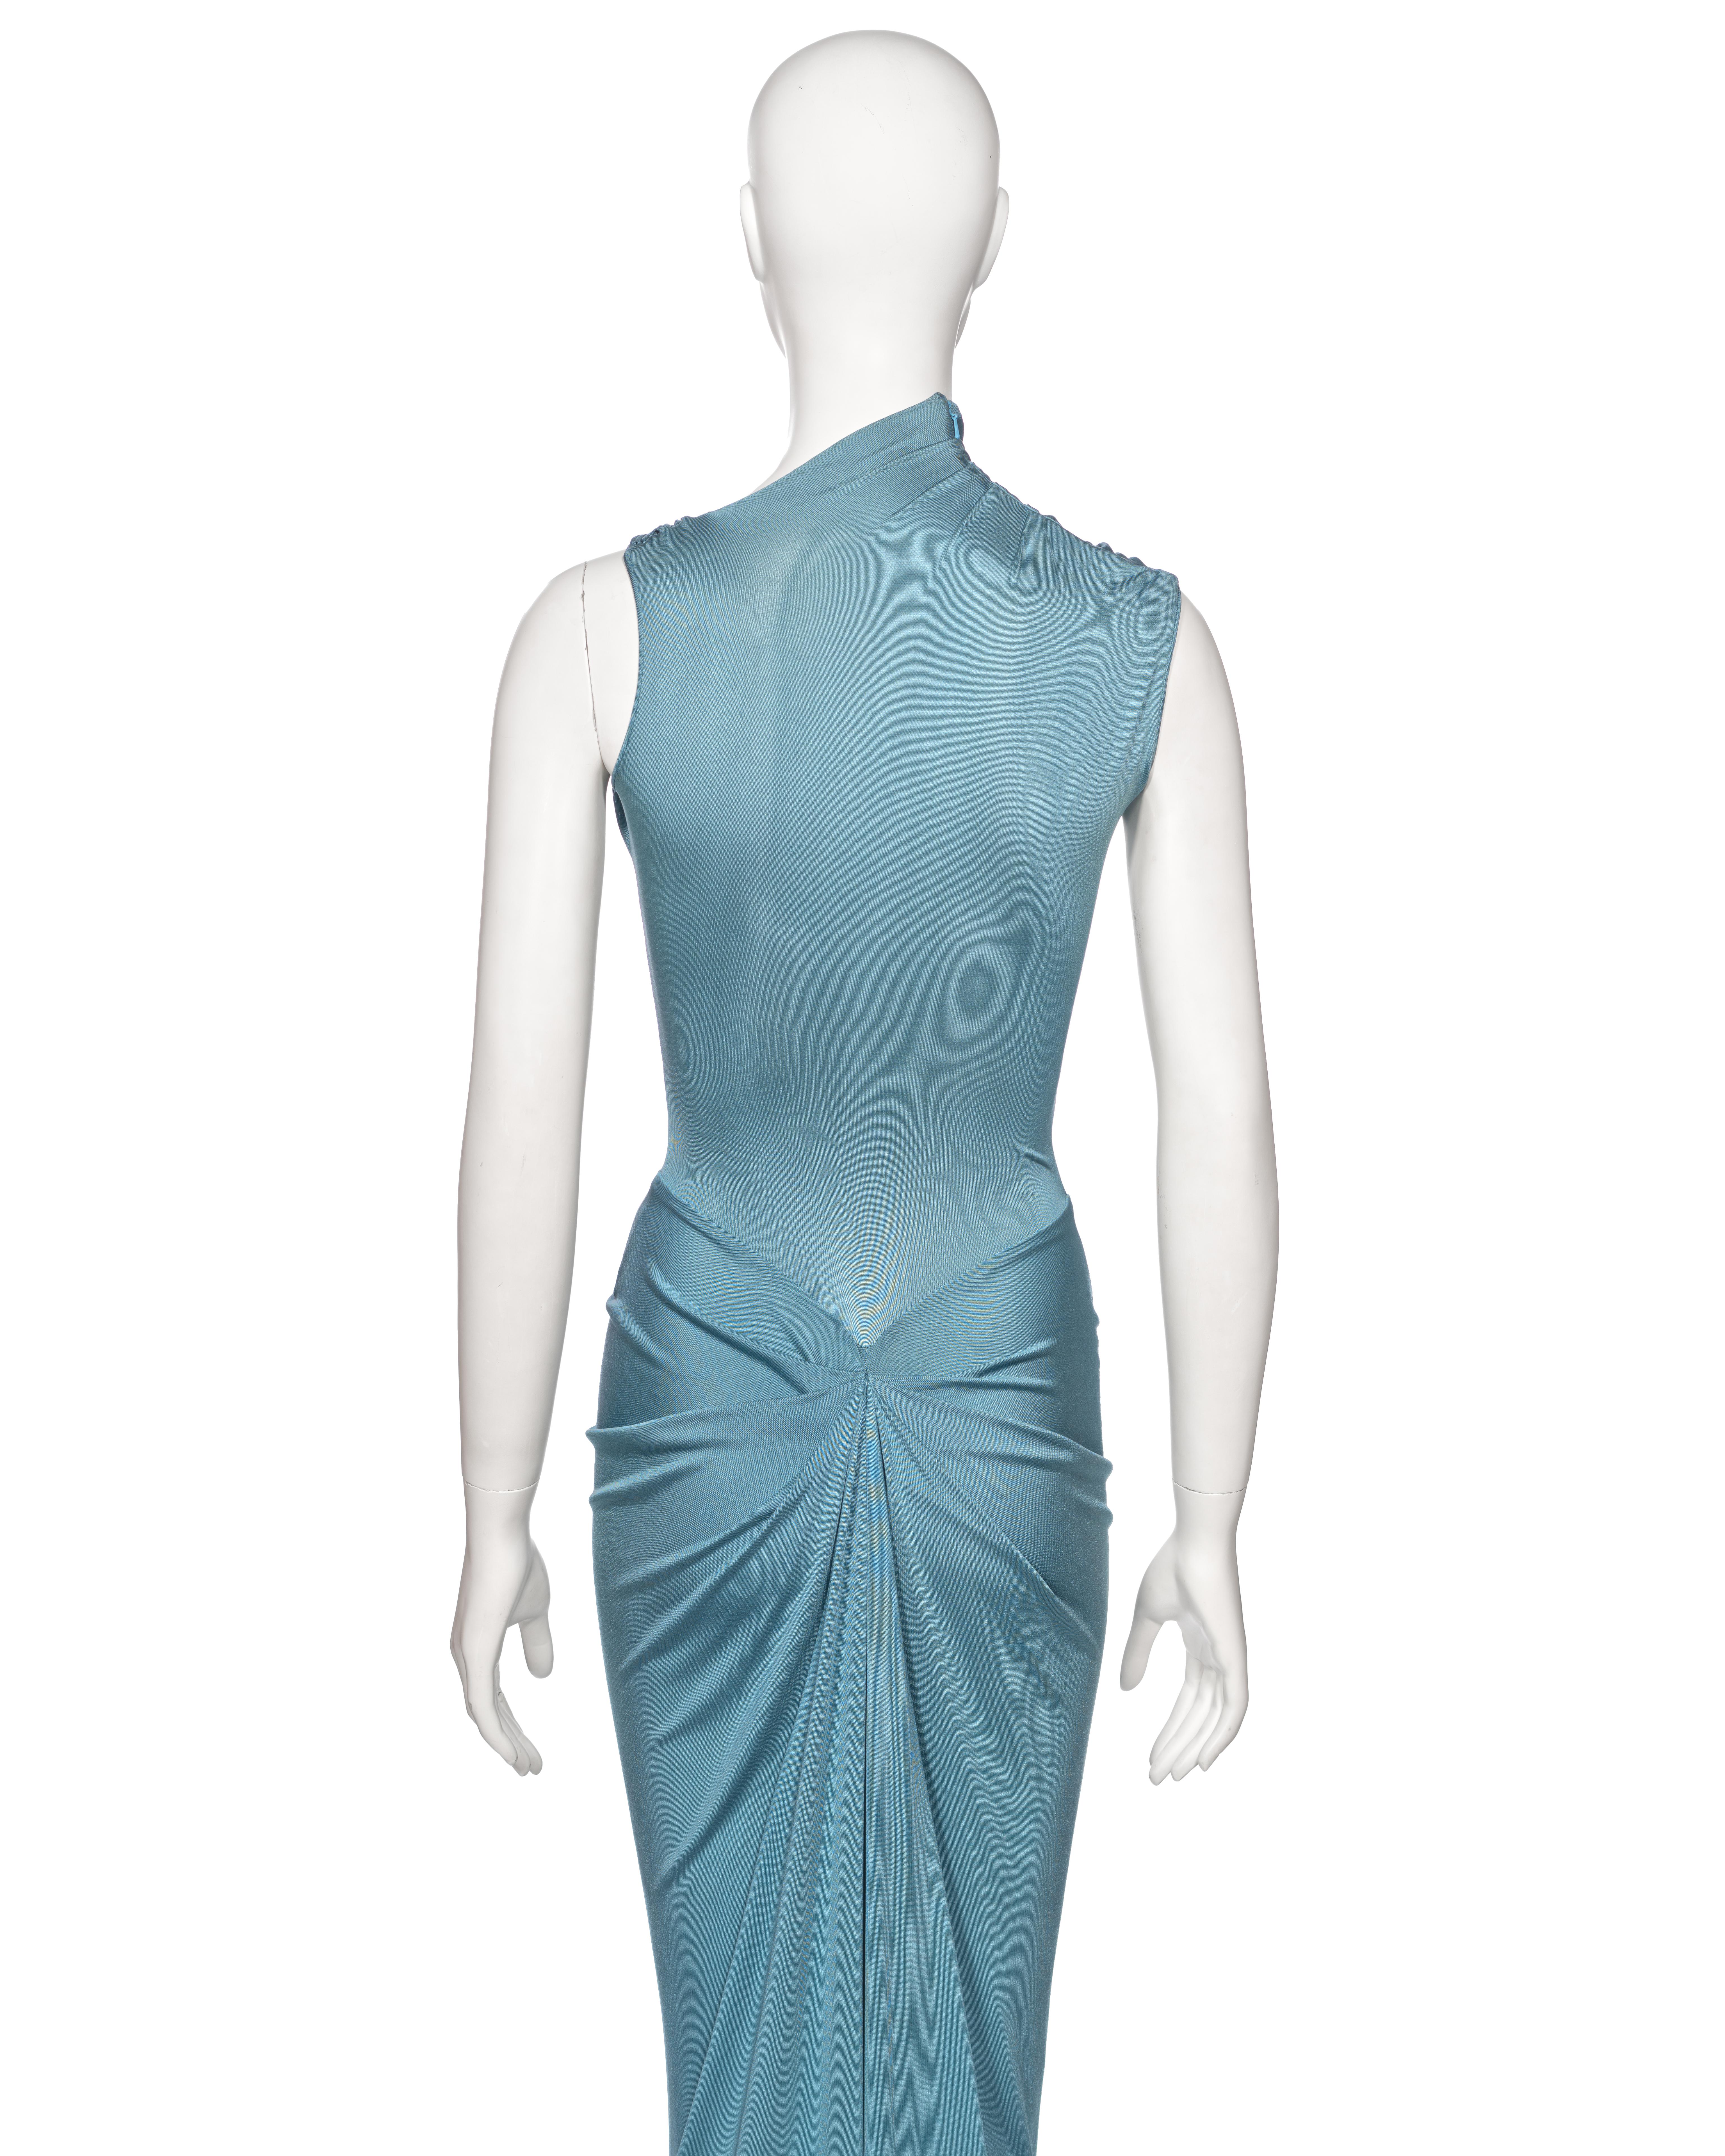 Christian Dior by John Galliano Powder Blue Silk Jersey Evening Dress, ss 2000 For Sale 5